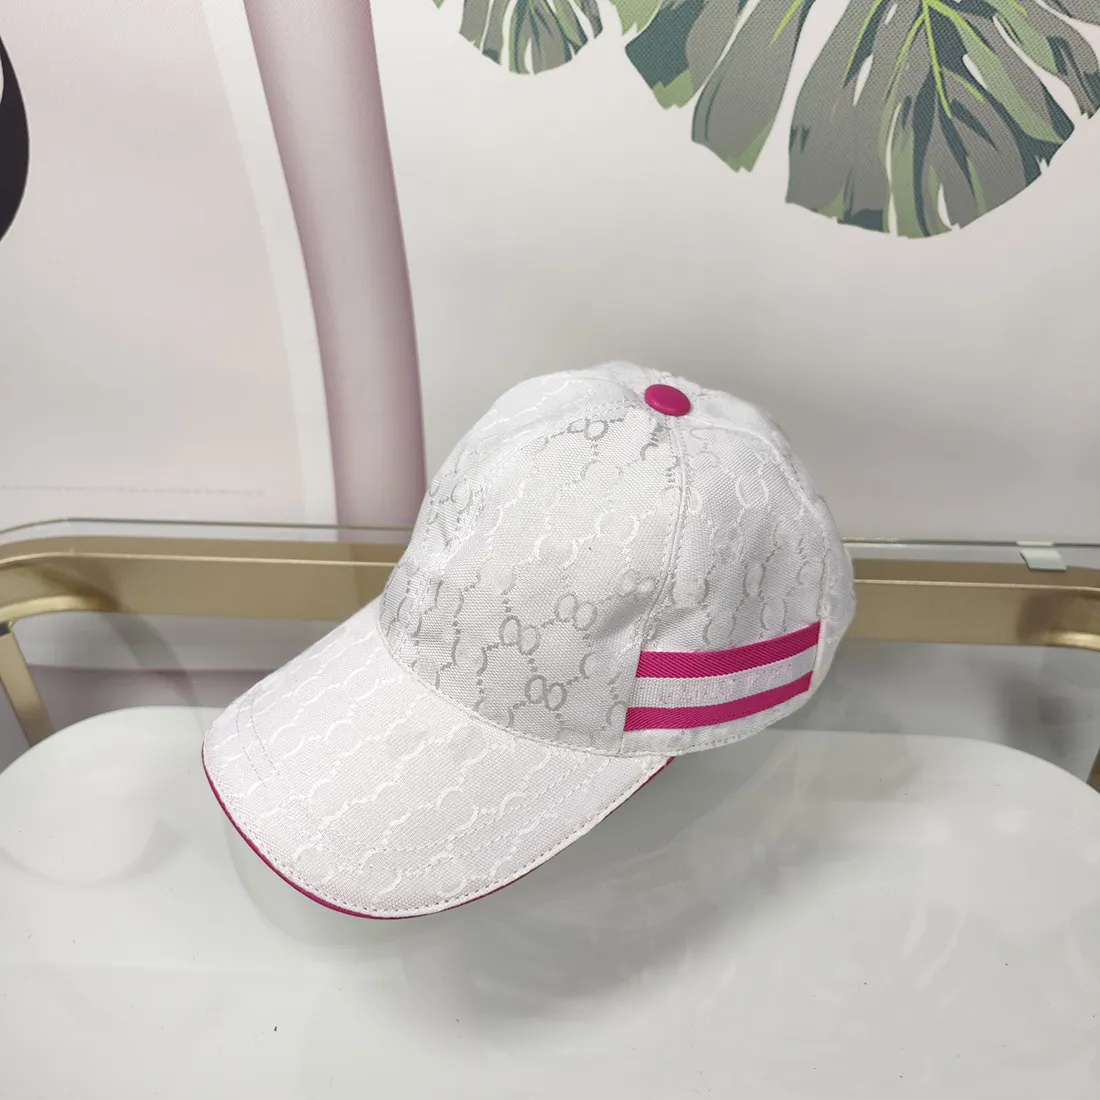 Novo estilo s desingers carta boné de beisebol mulher bonés manempty bordado chapéus de sol moda lazer design balde chapéu 7 cores bordado protetor solar chapéu